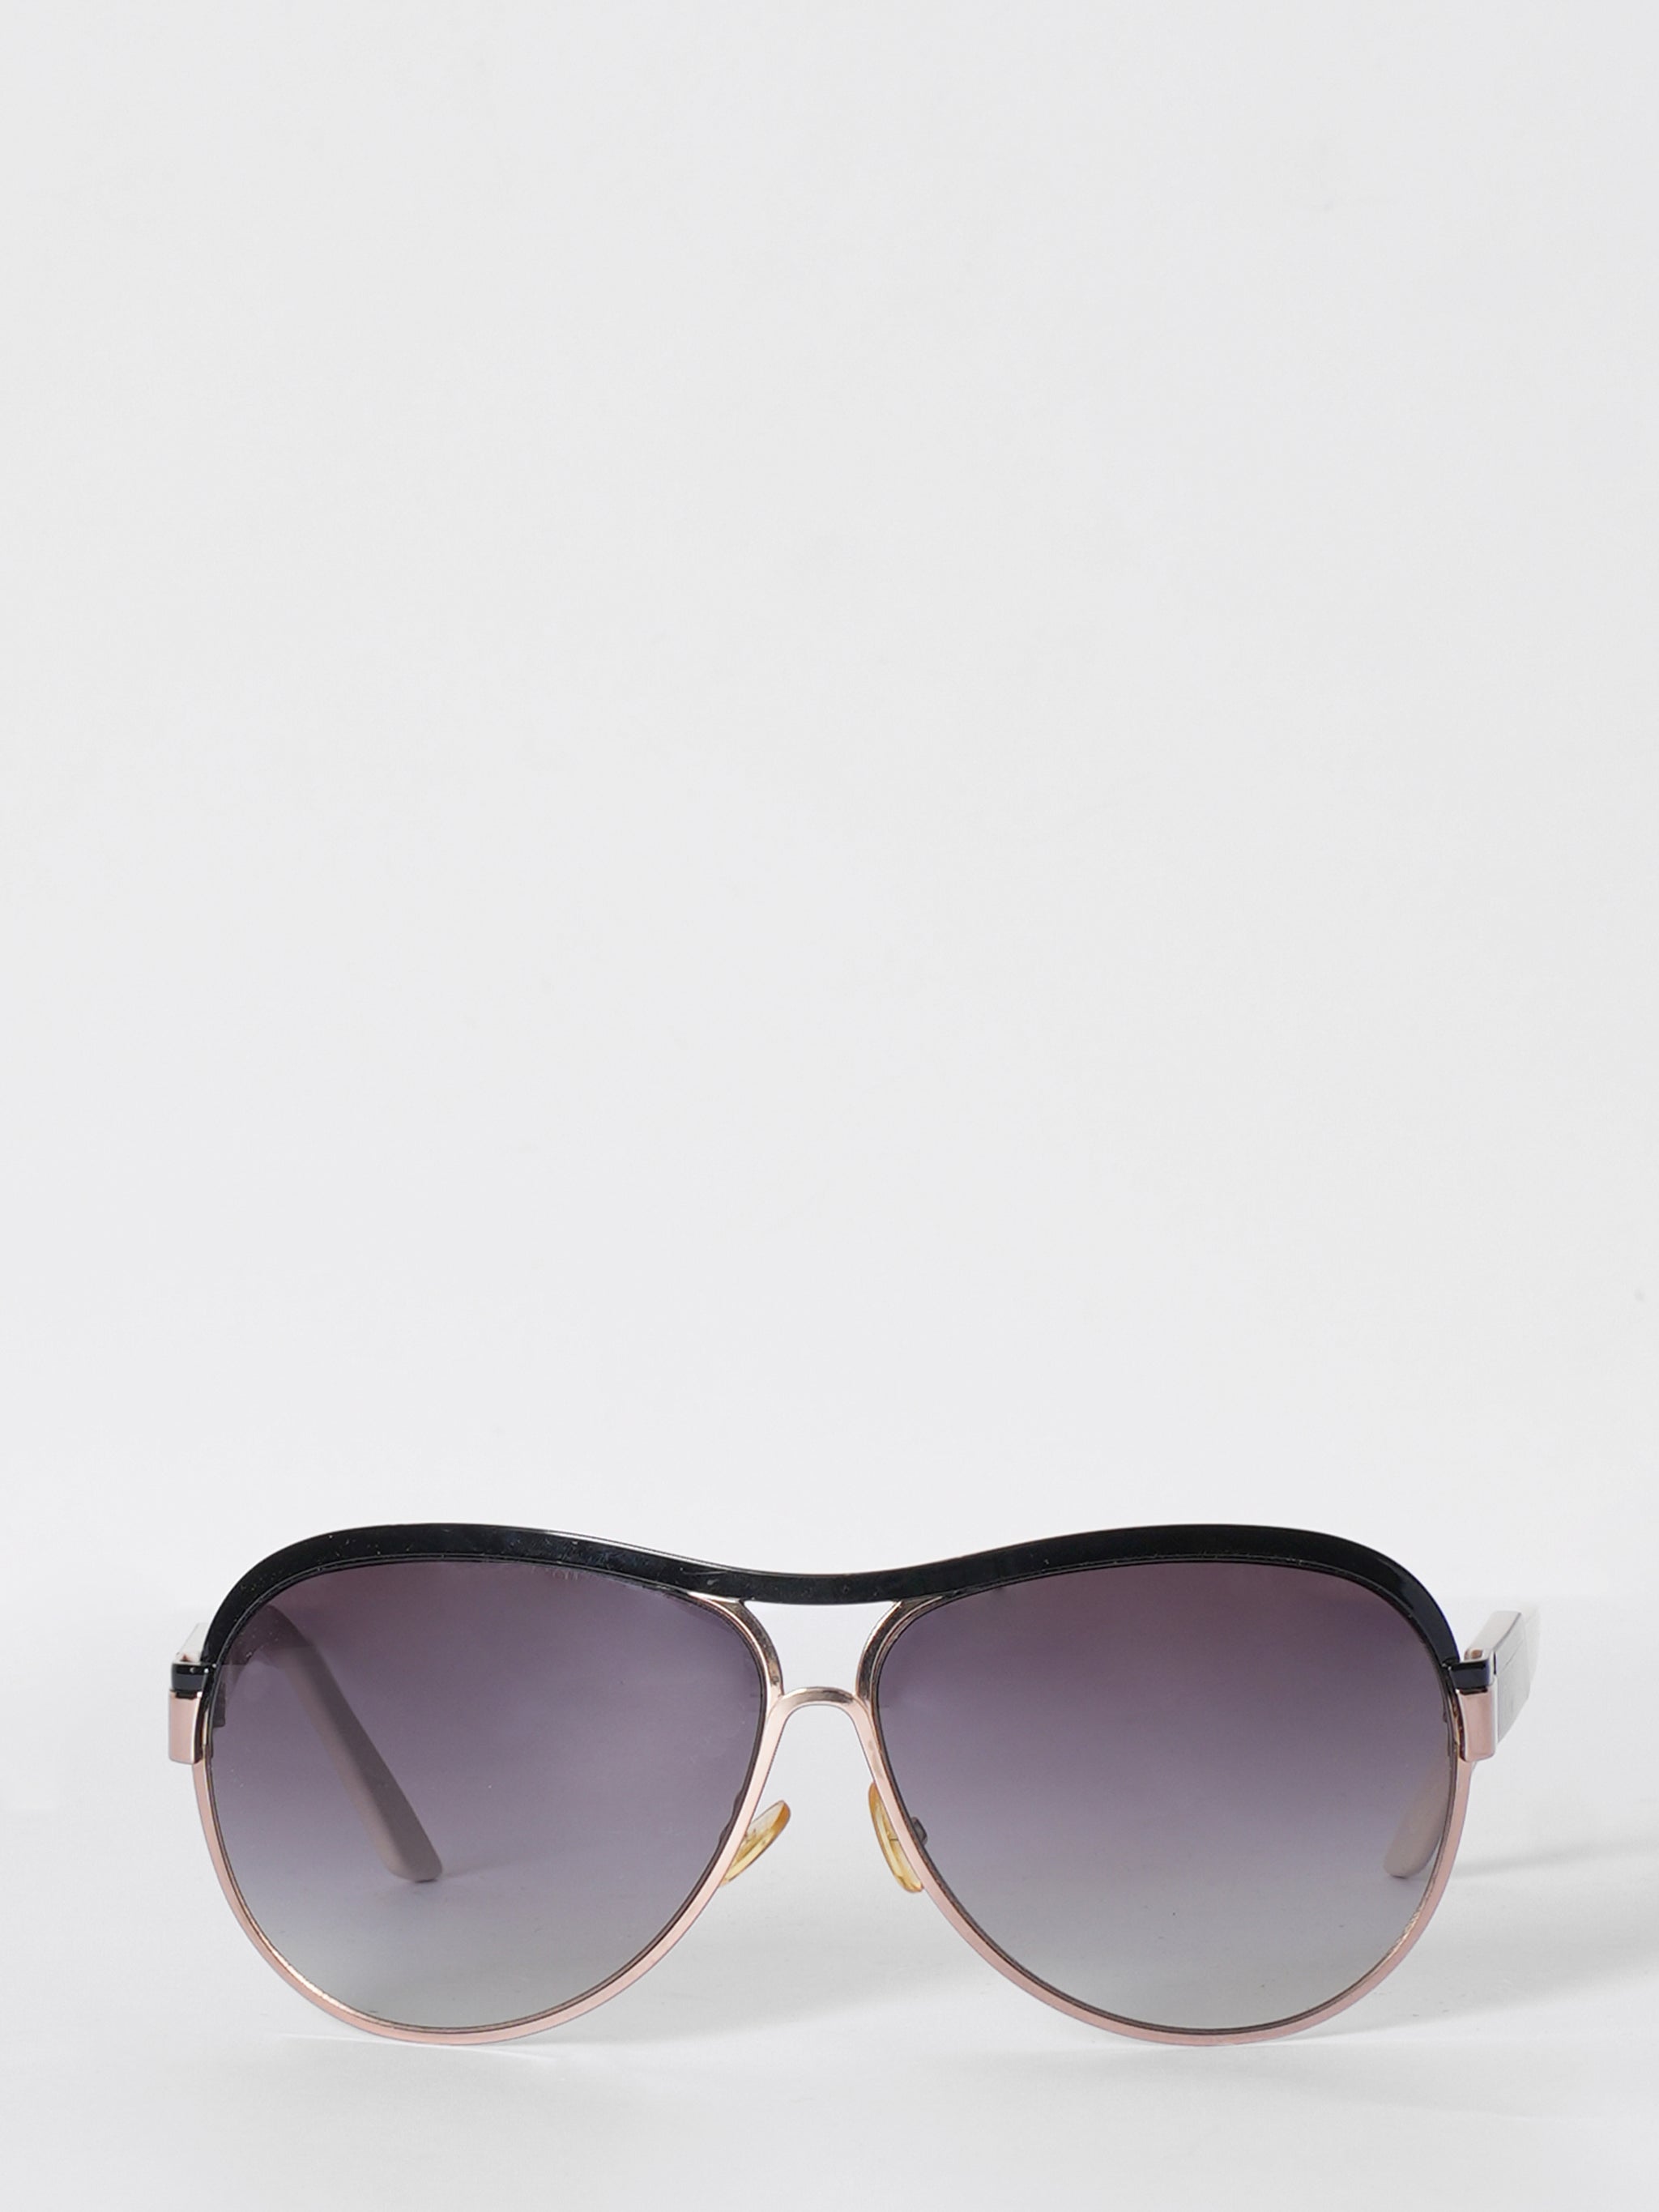 Christian Dior Aviator Sunglasses